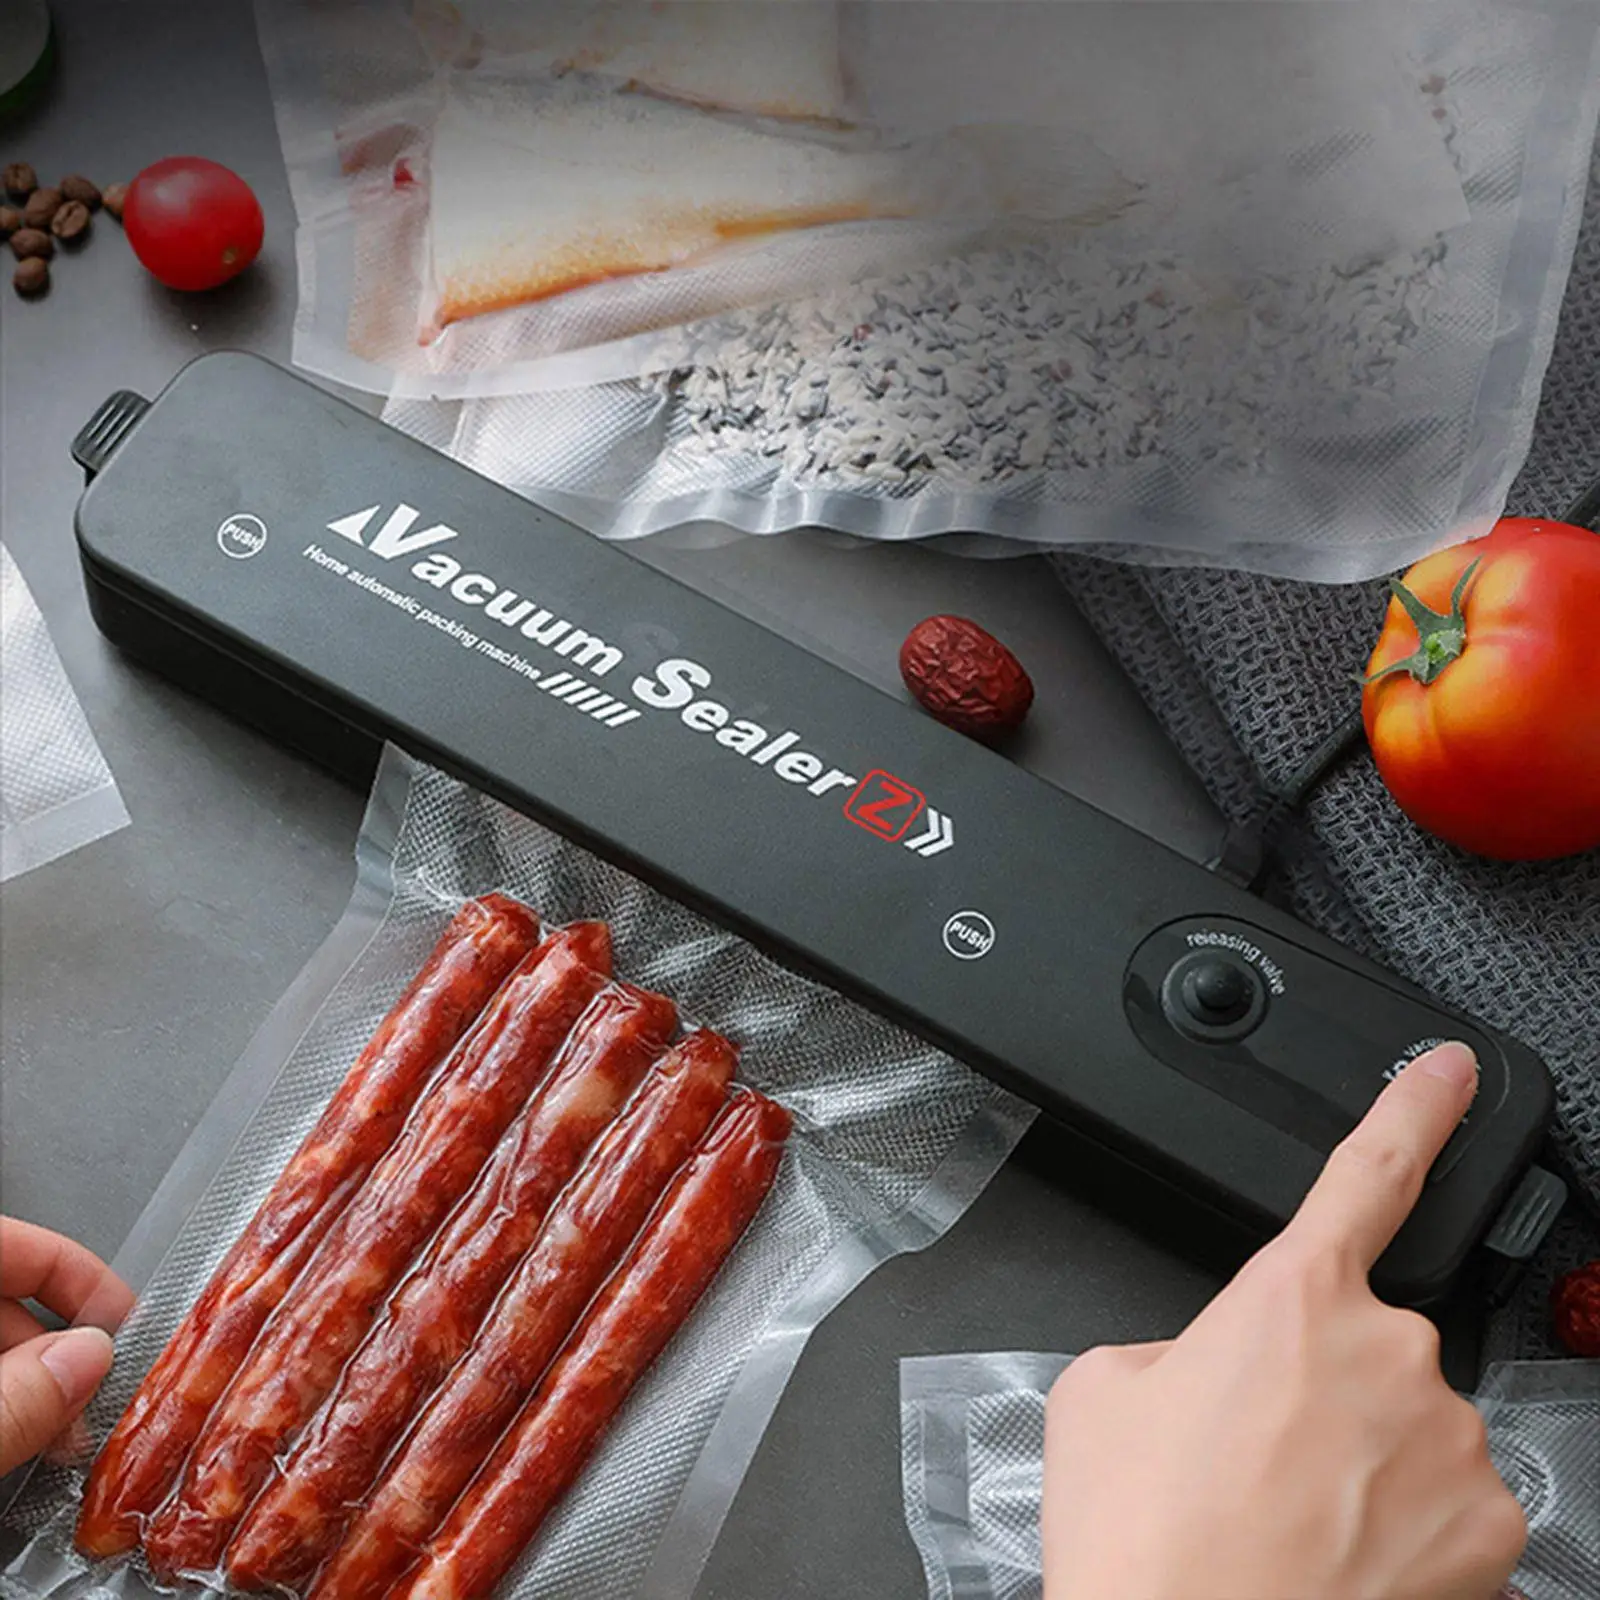 Kitchen Vacuum Sealer Machine Seal Meal Food Saver System Dry & Moist Modes